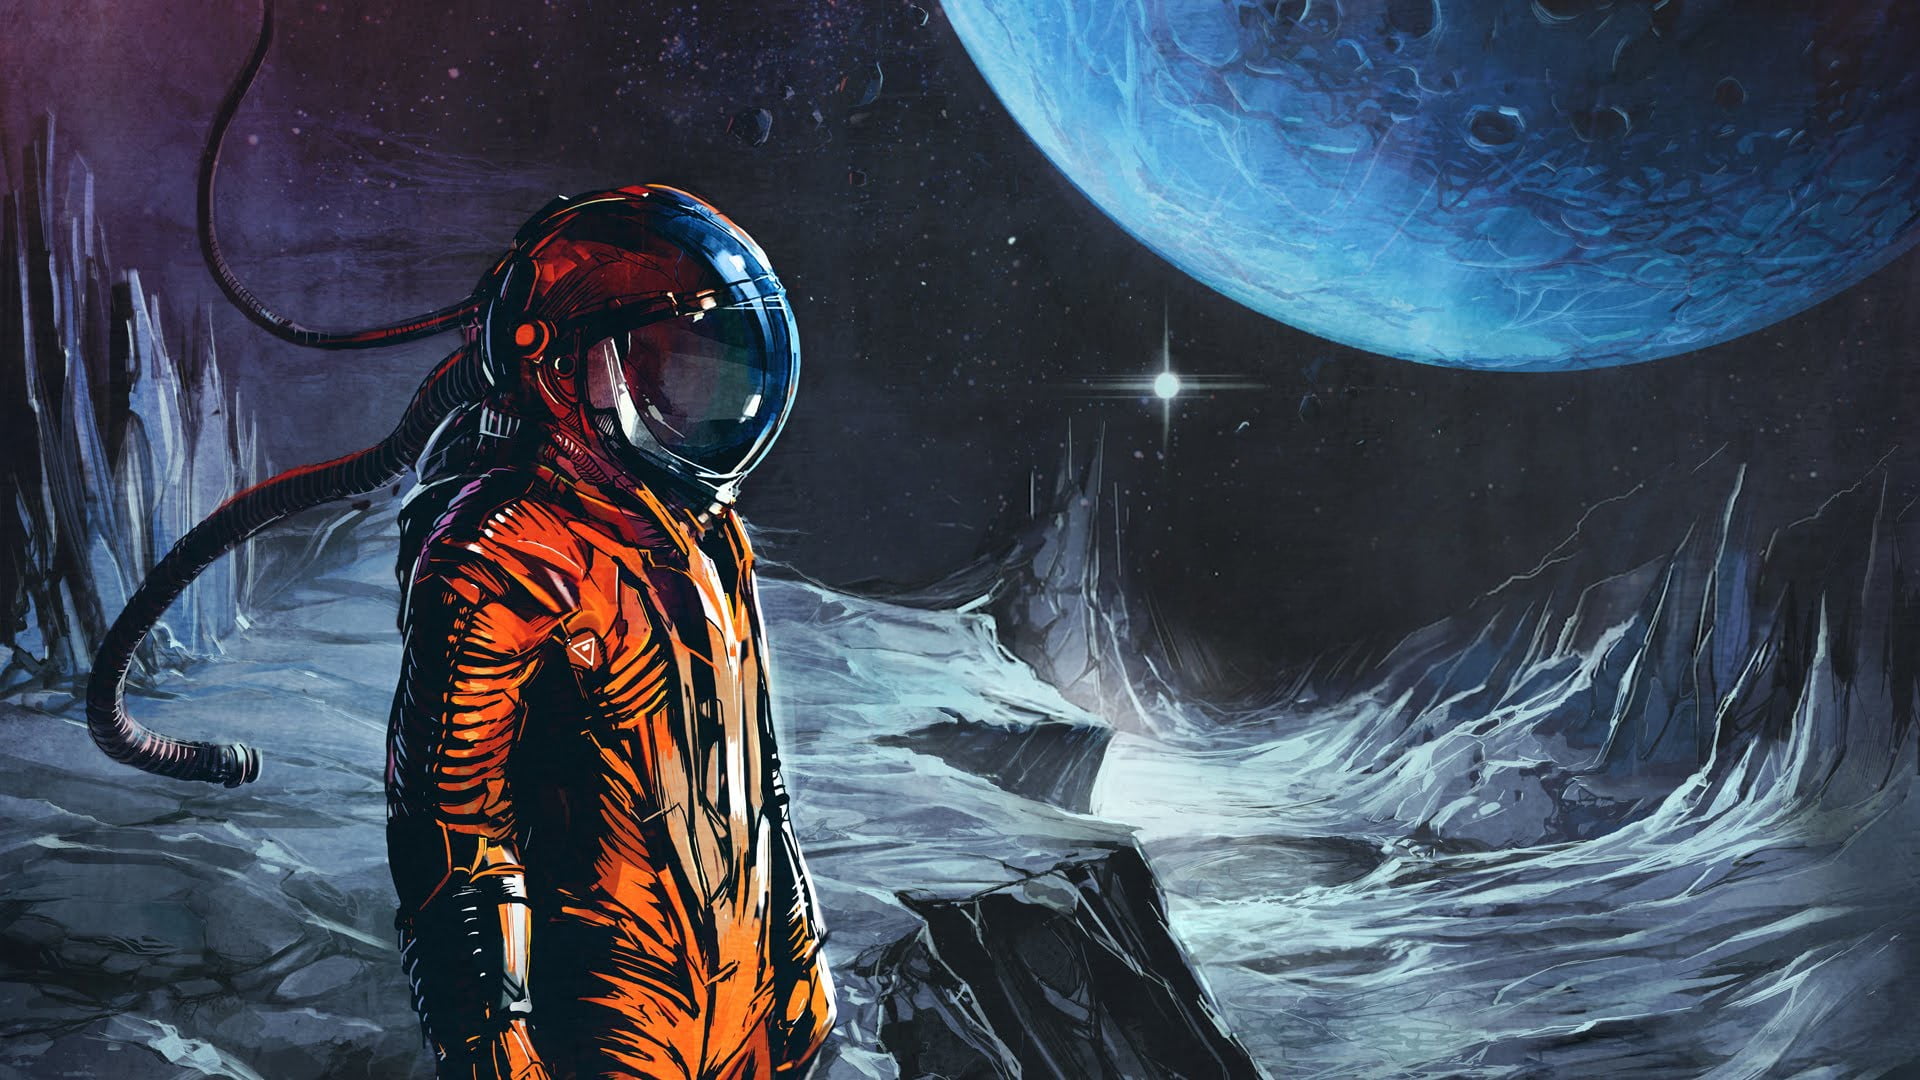 man in orange astronaut suit with moon wallpaper, man with helmet on moon painting